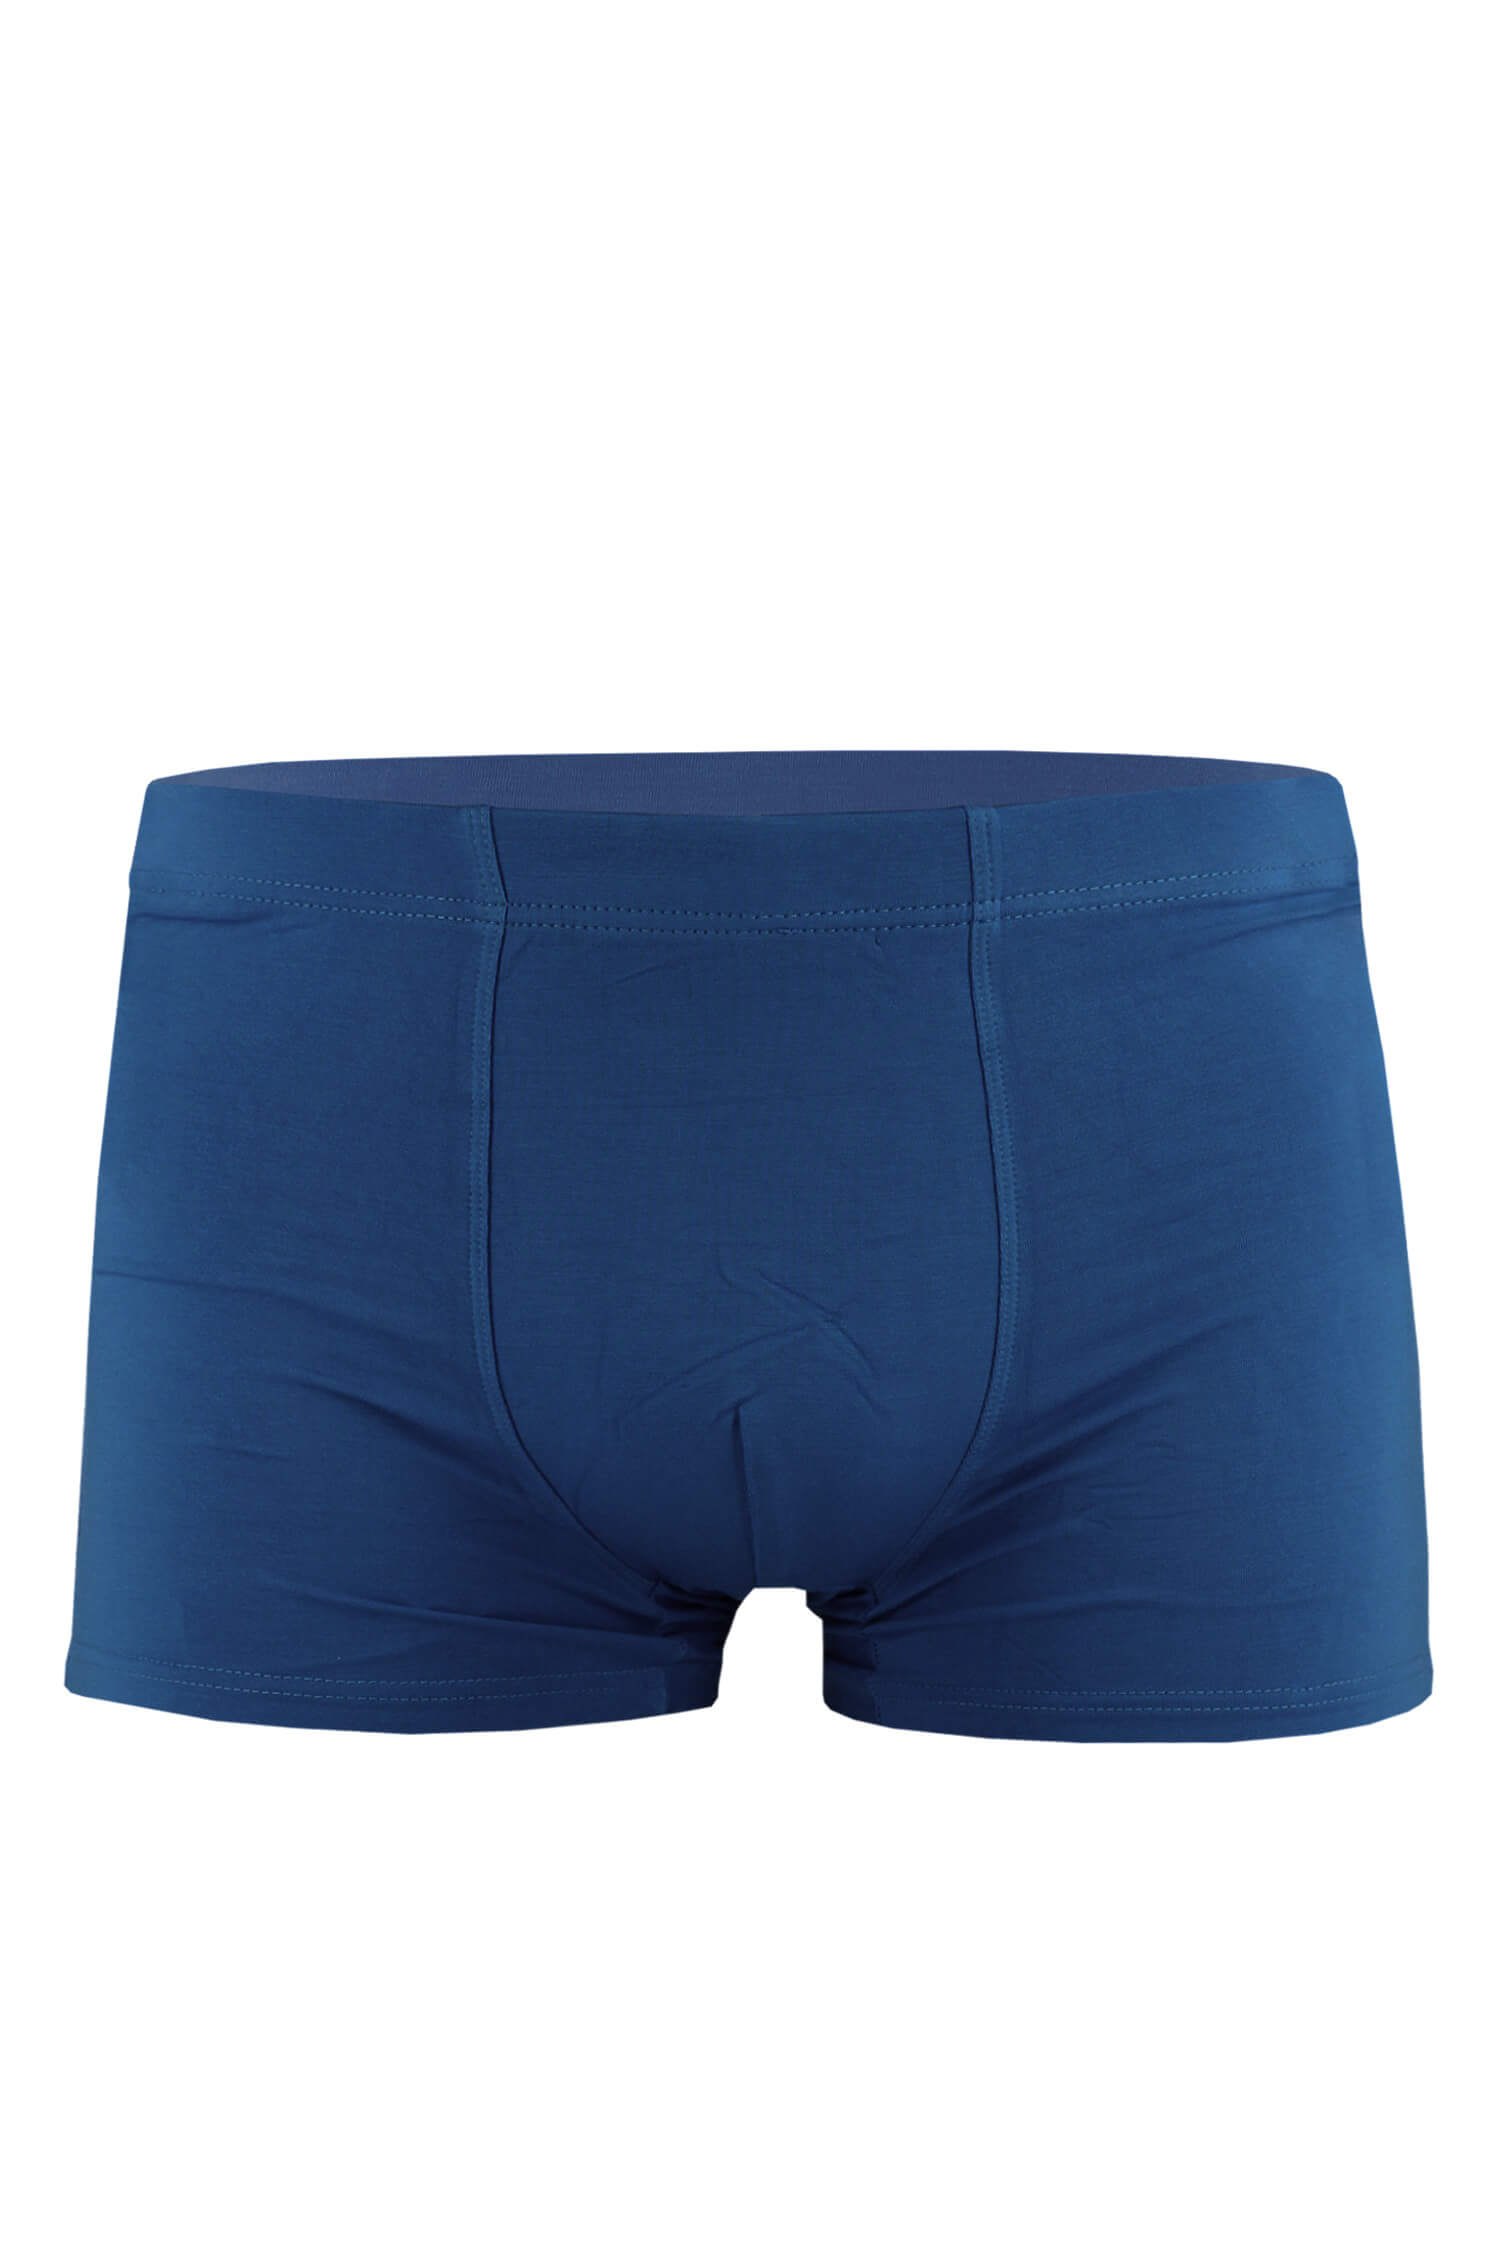 Drake KAPO maxi boxerky 4XL modrá